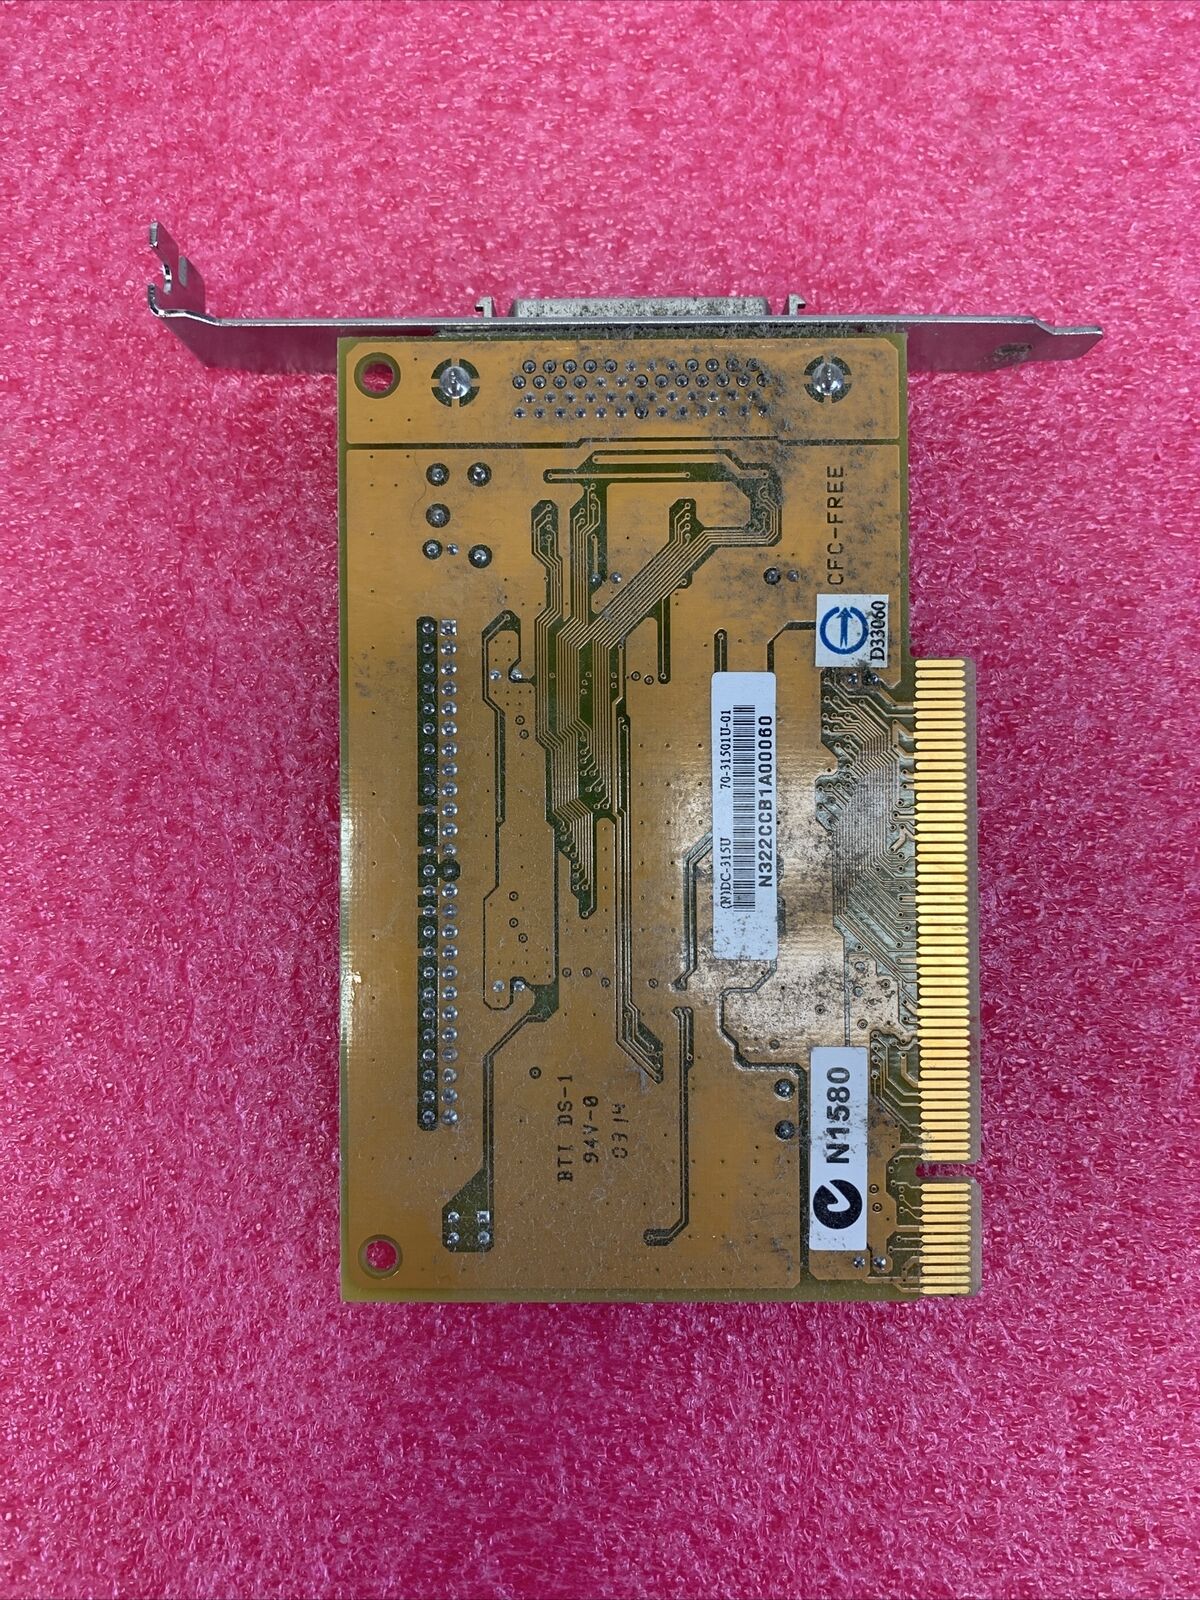 Tekram DC-315U Ultra SCSI Host Adapter